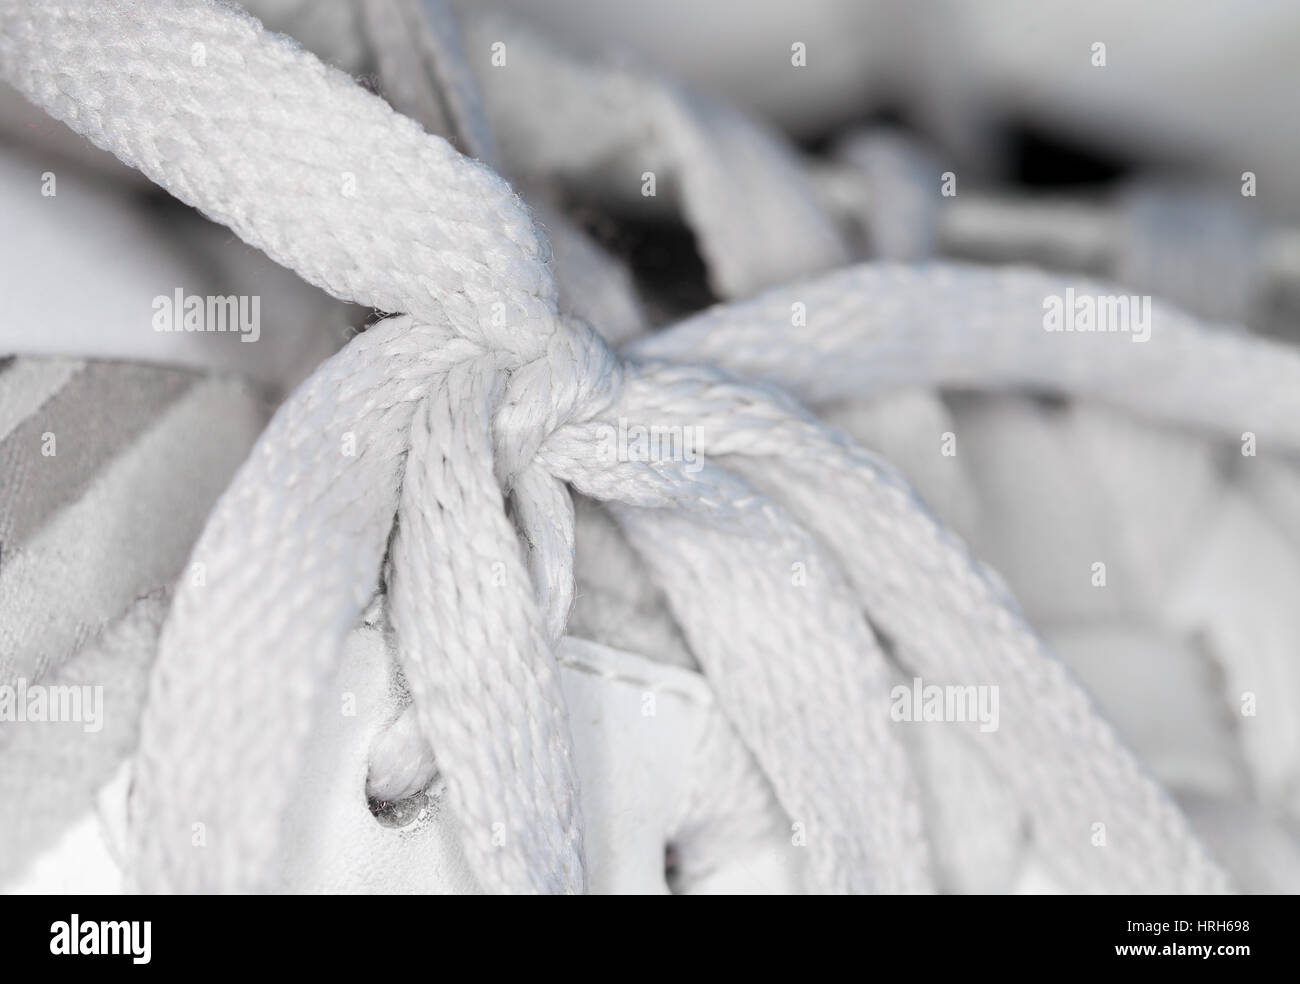 white shoelace knot on white gym shoes Stock Photo